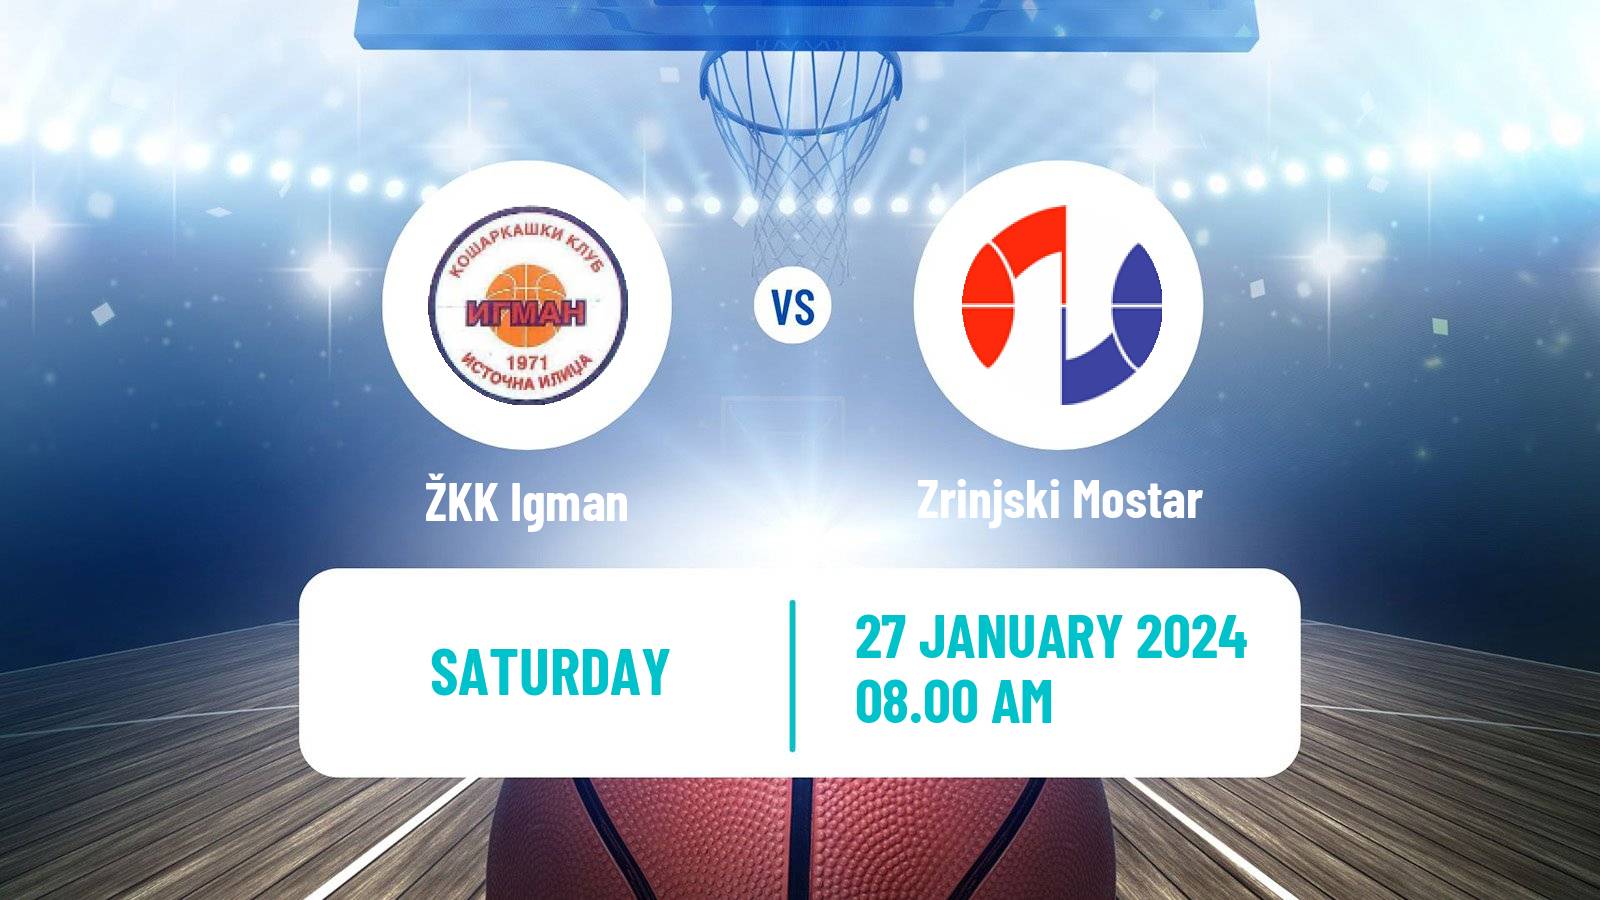 Basketball Bosnian Prvenstvo Basketball Women Igman - Zrinjski Mostar